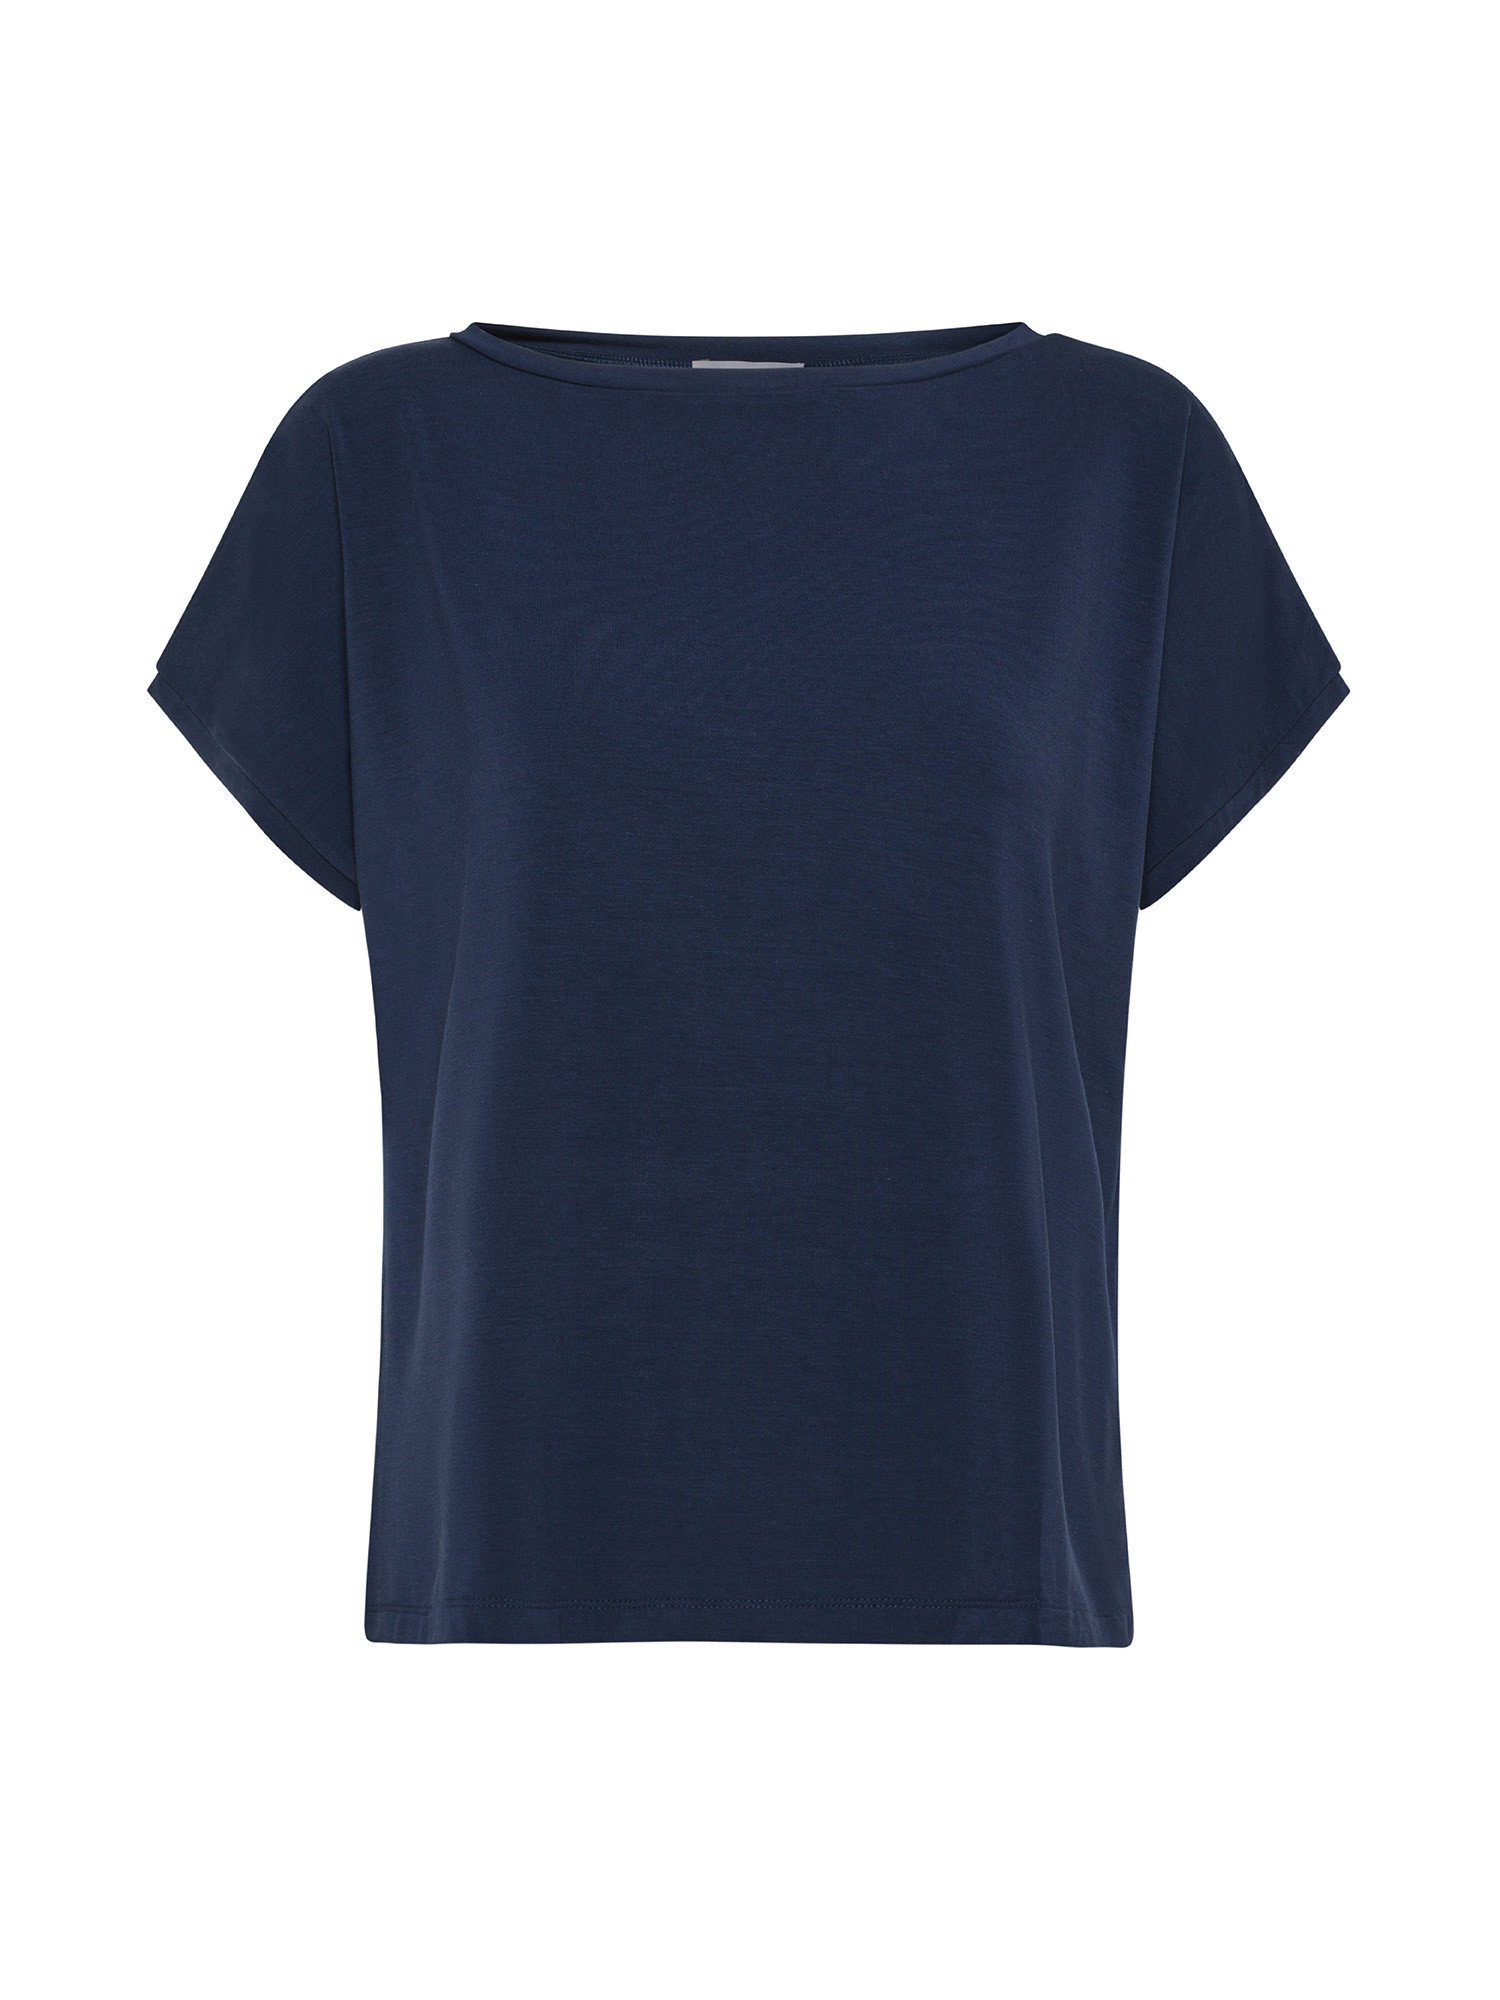 Bamboo viscose T-shirt, Navy Blue, large image number 0